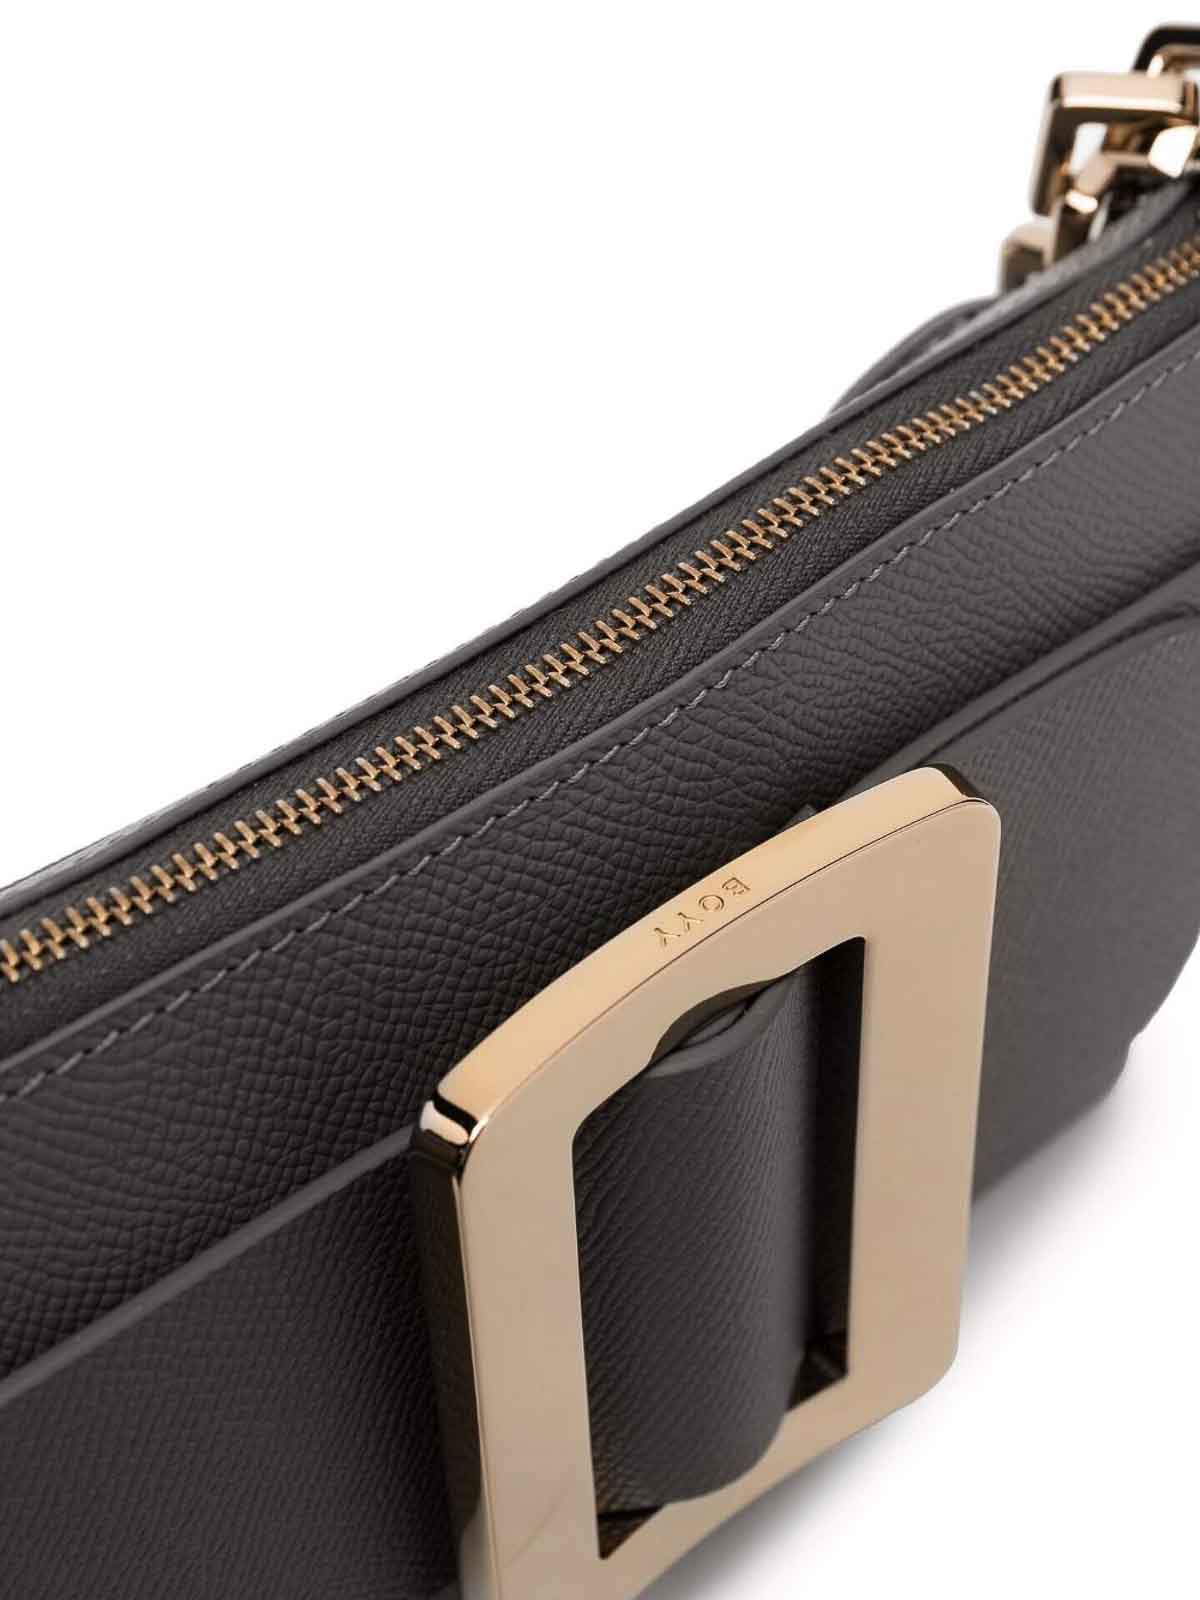 Boyy Buckle Pouchette Epsom leather handbag - ShopStyle Shoulder Bags